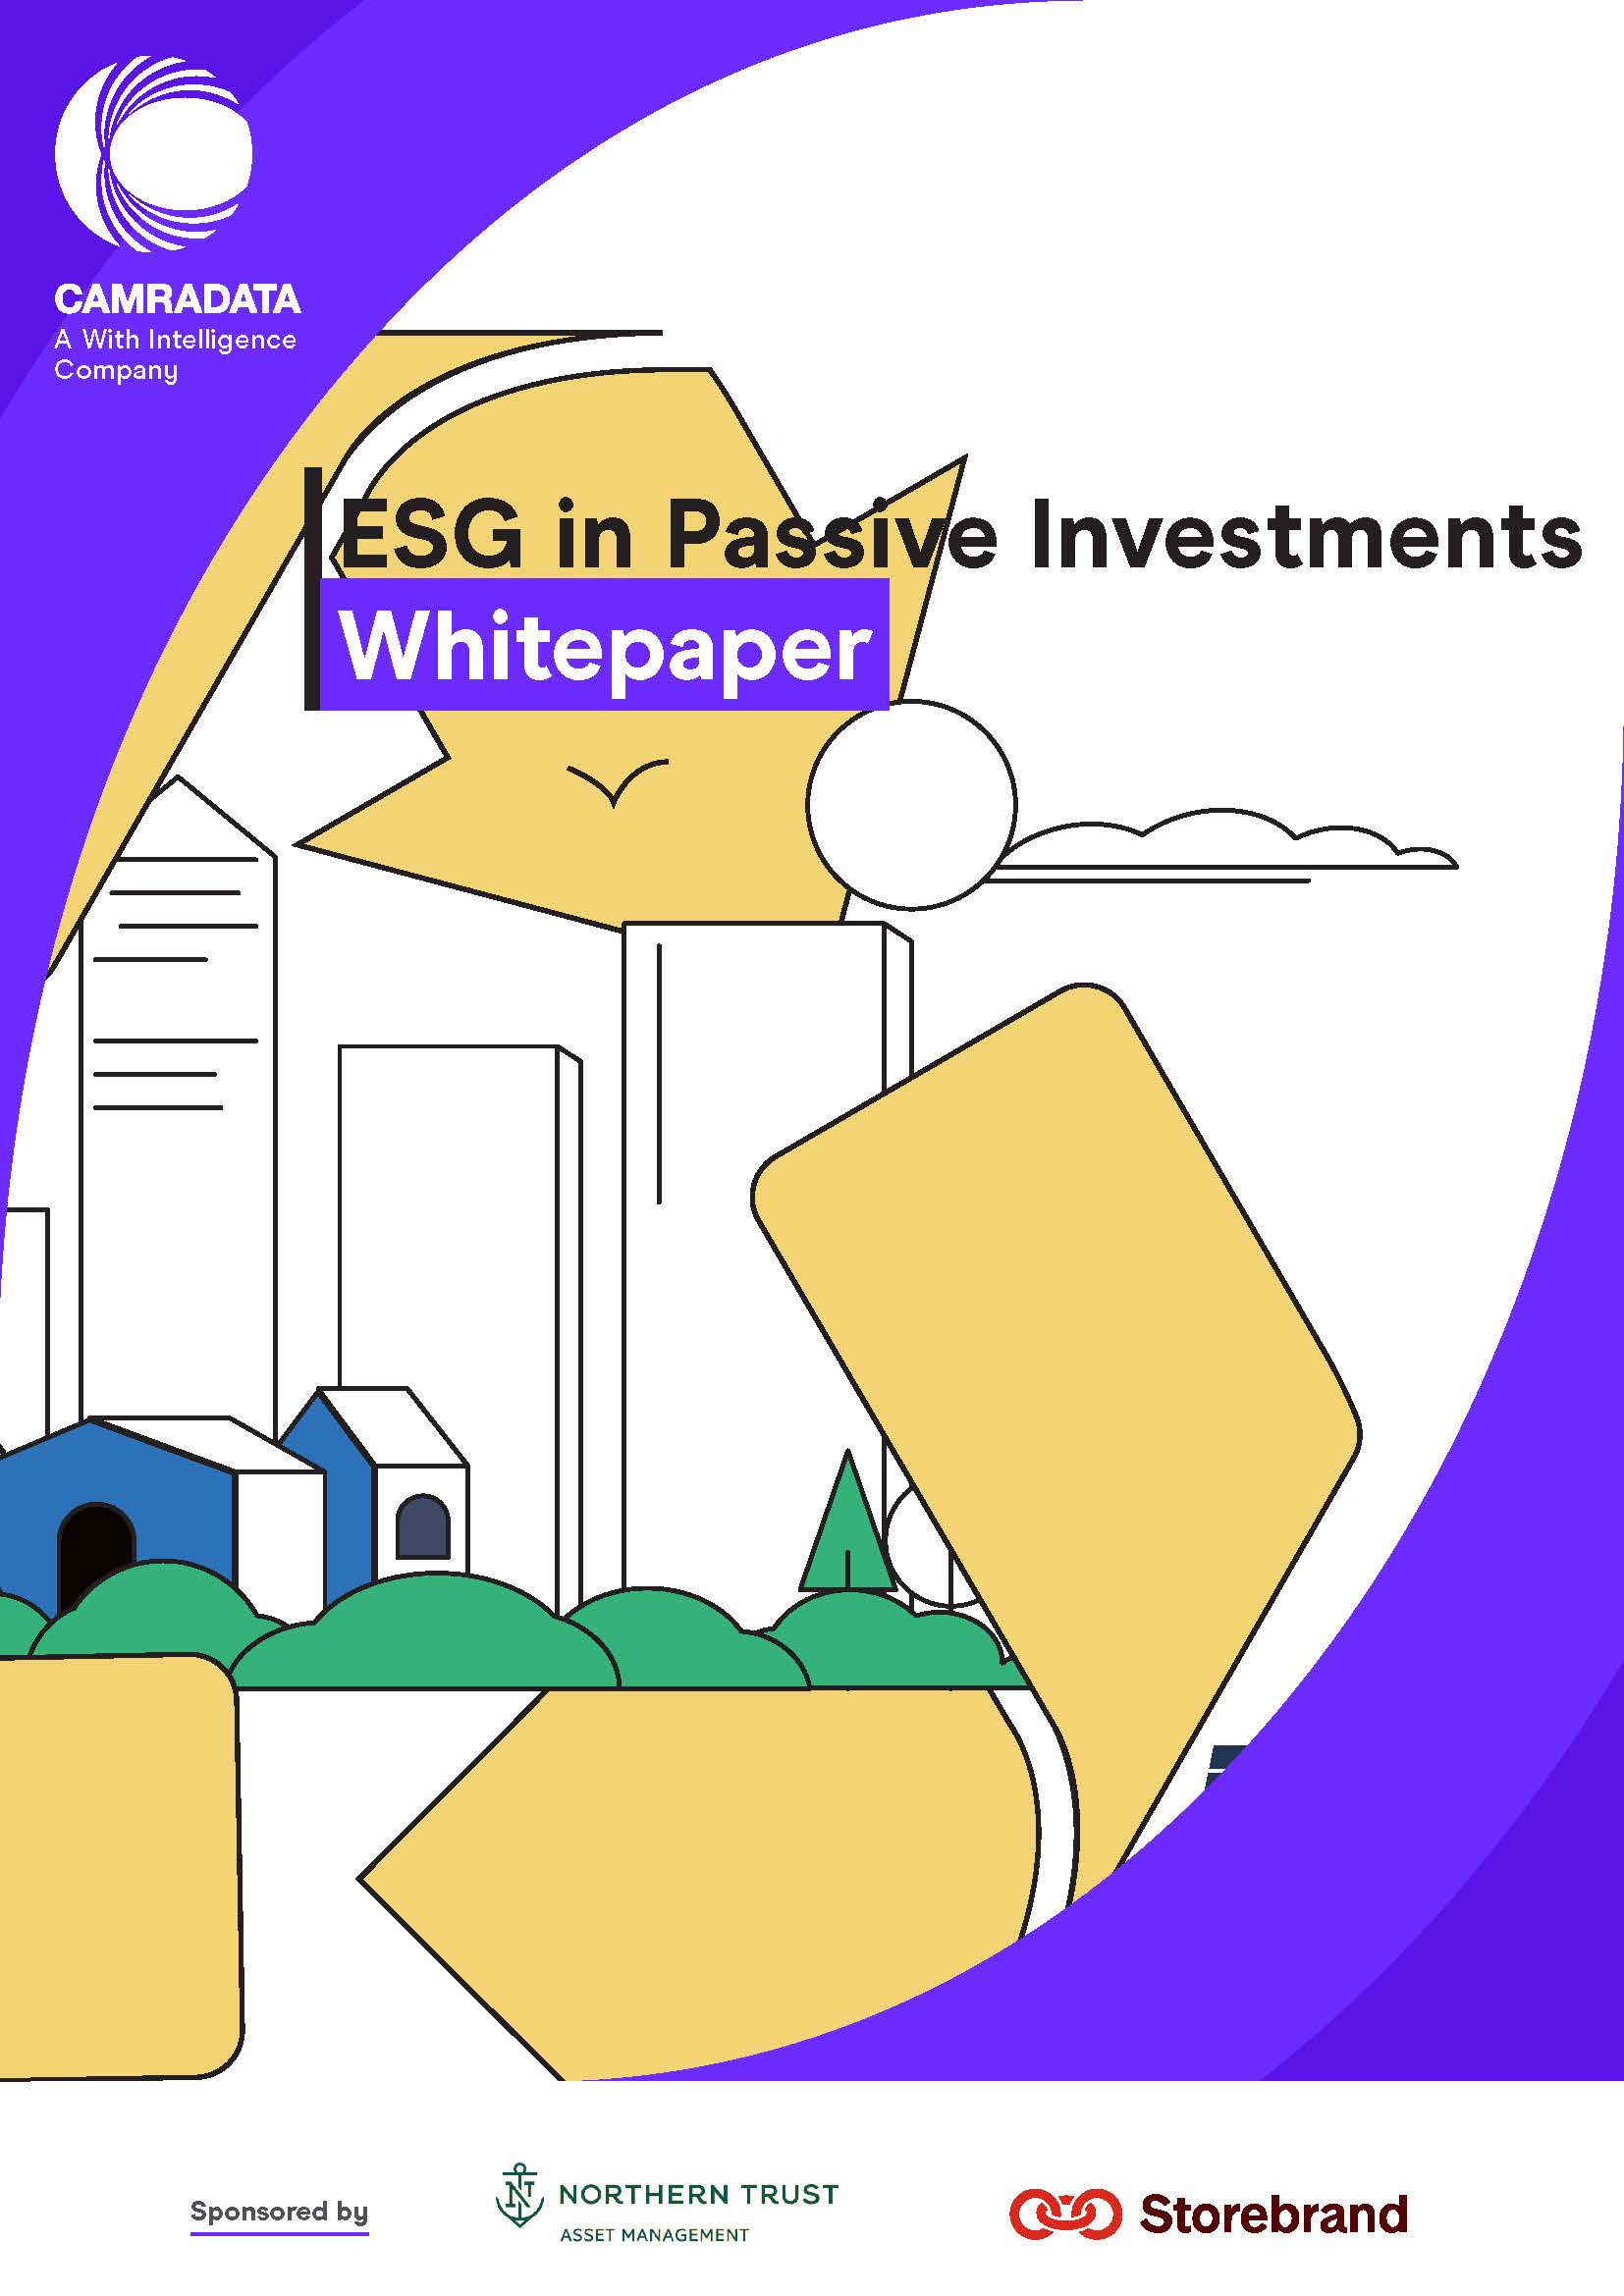 ESG in Passive Investments